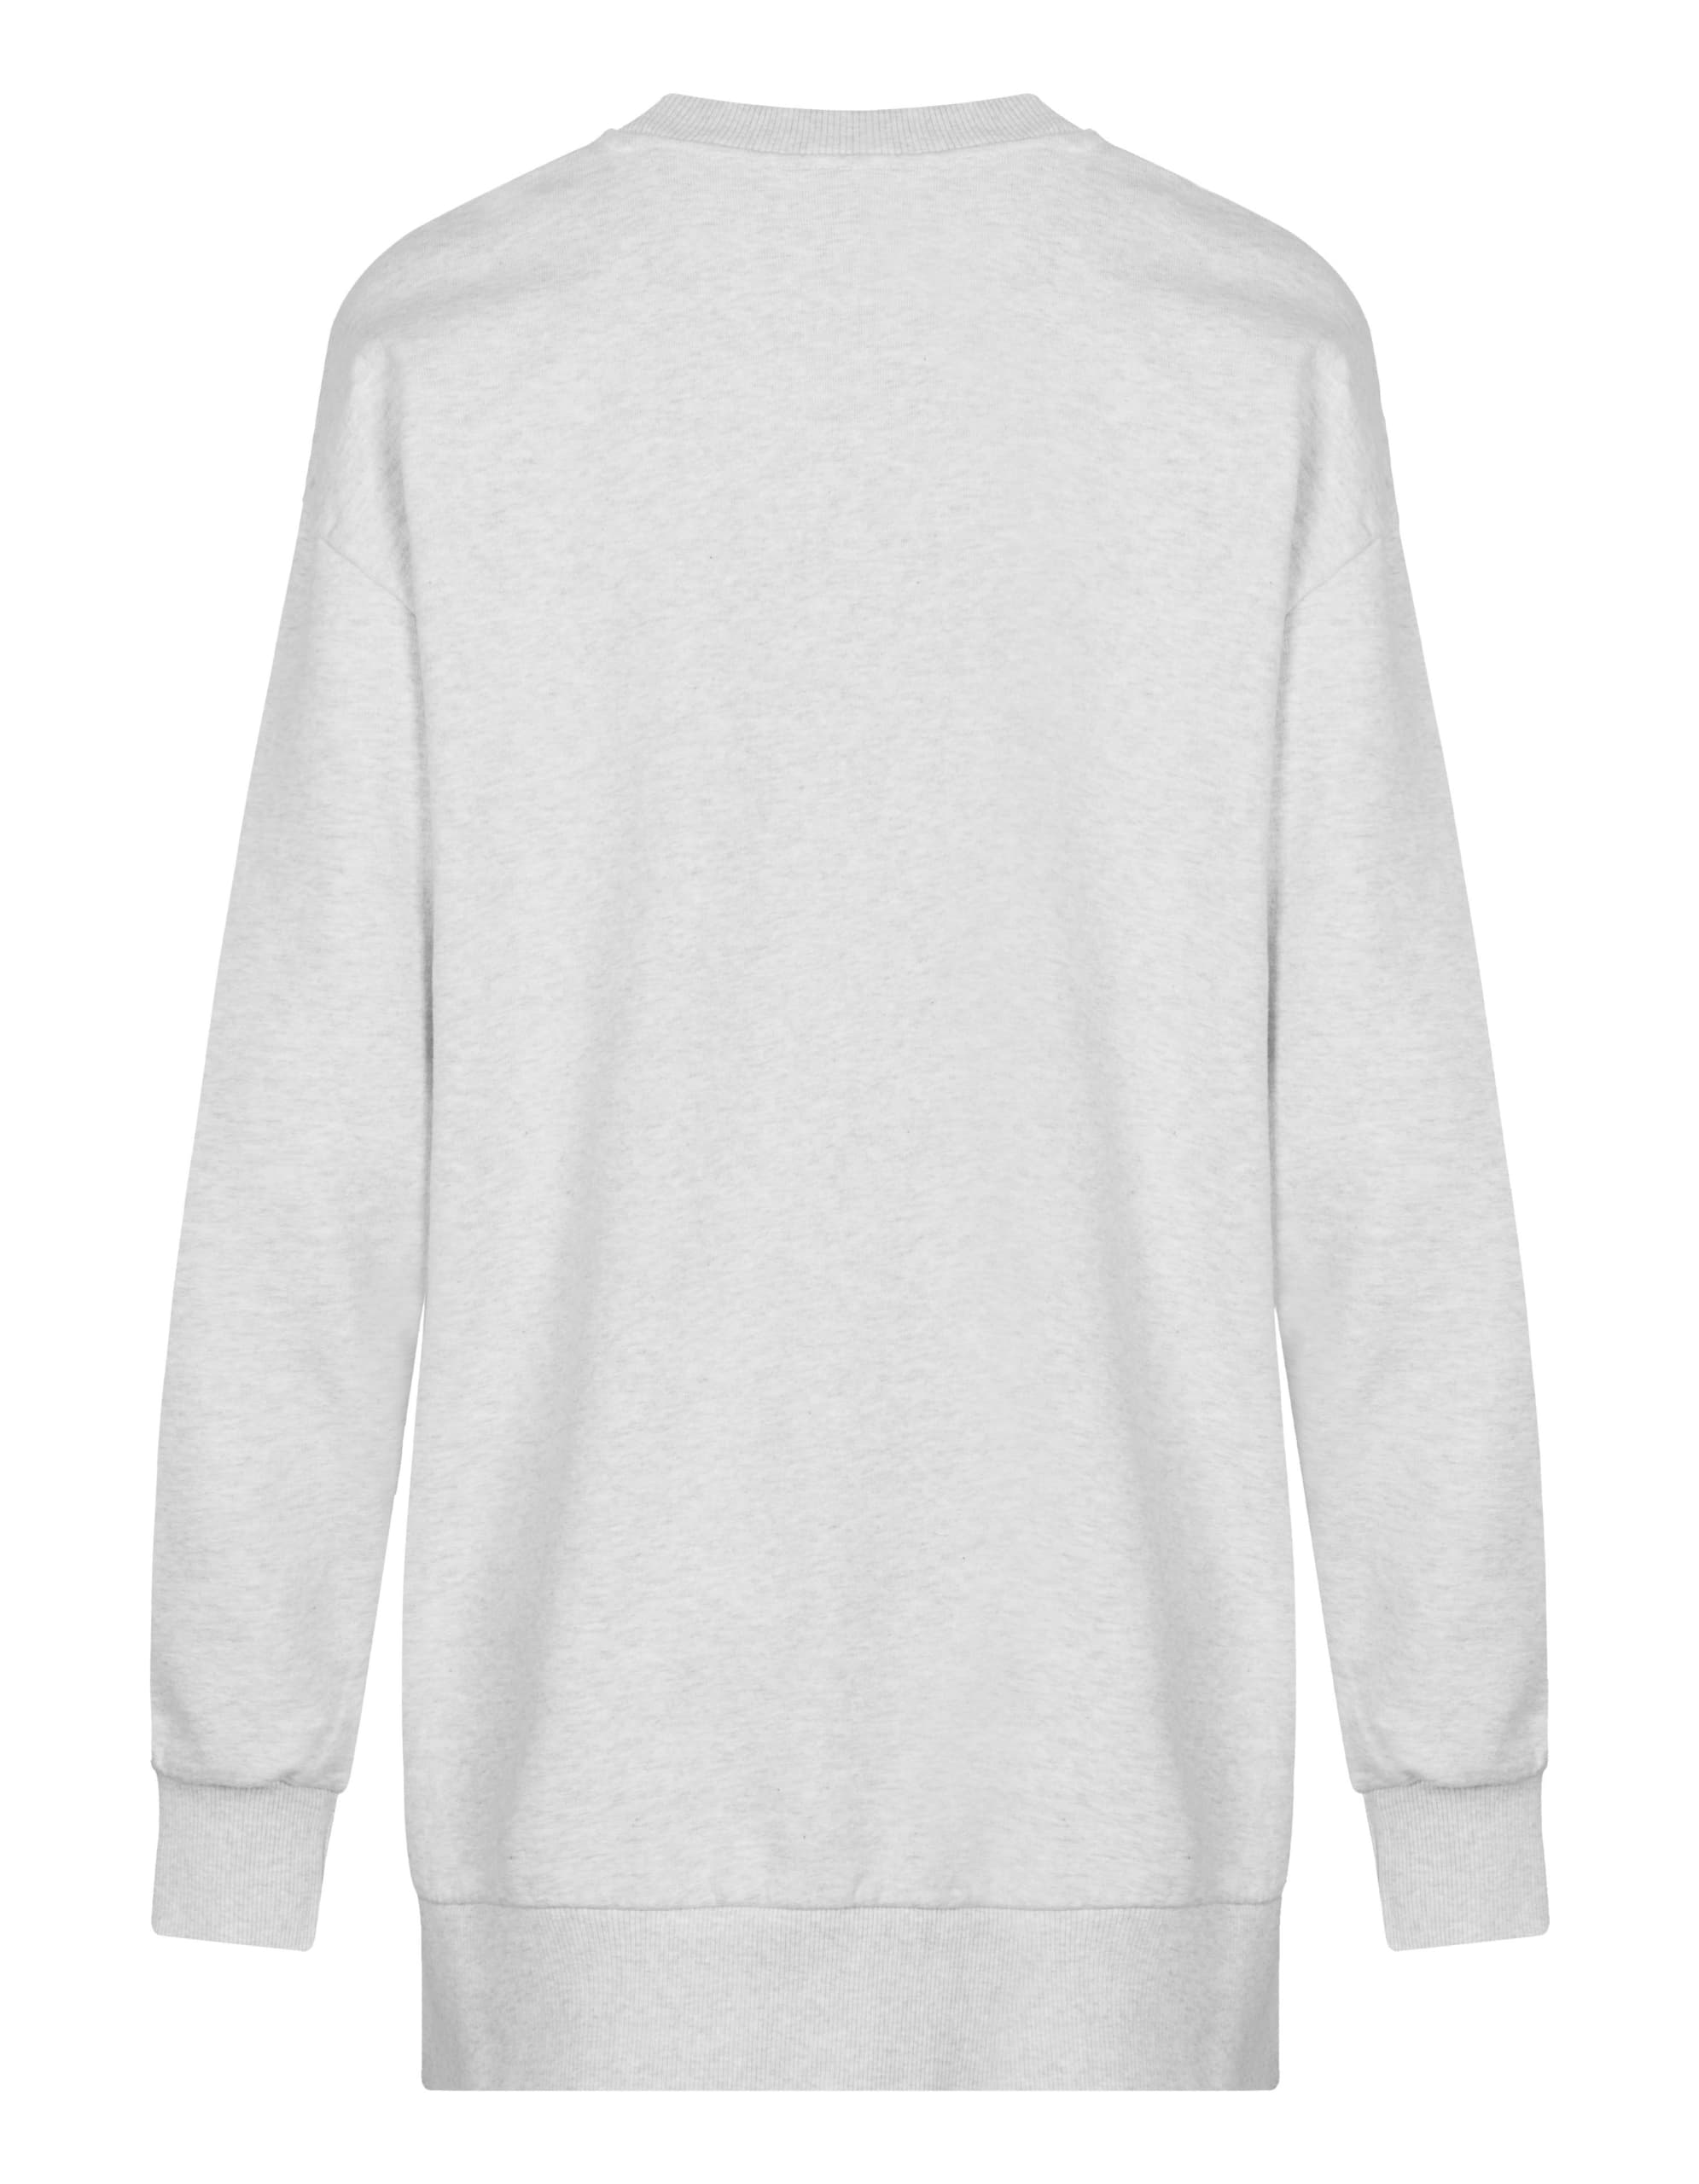  Relaxed Crew Sweatshirt, Light Grey Melange Galaxy, S